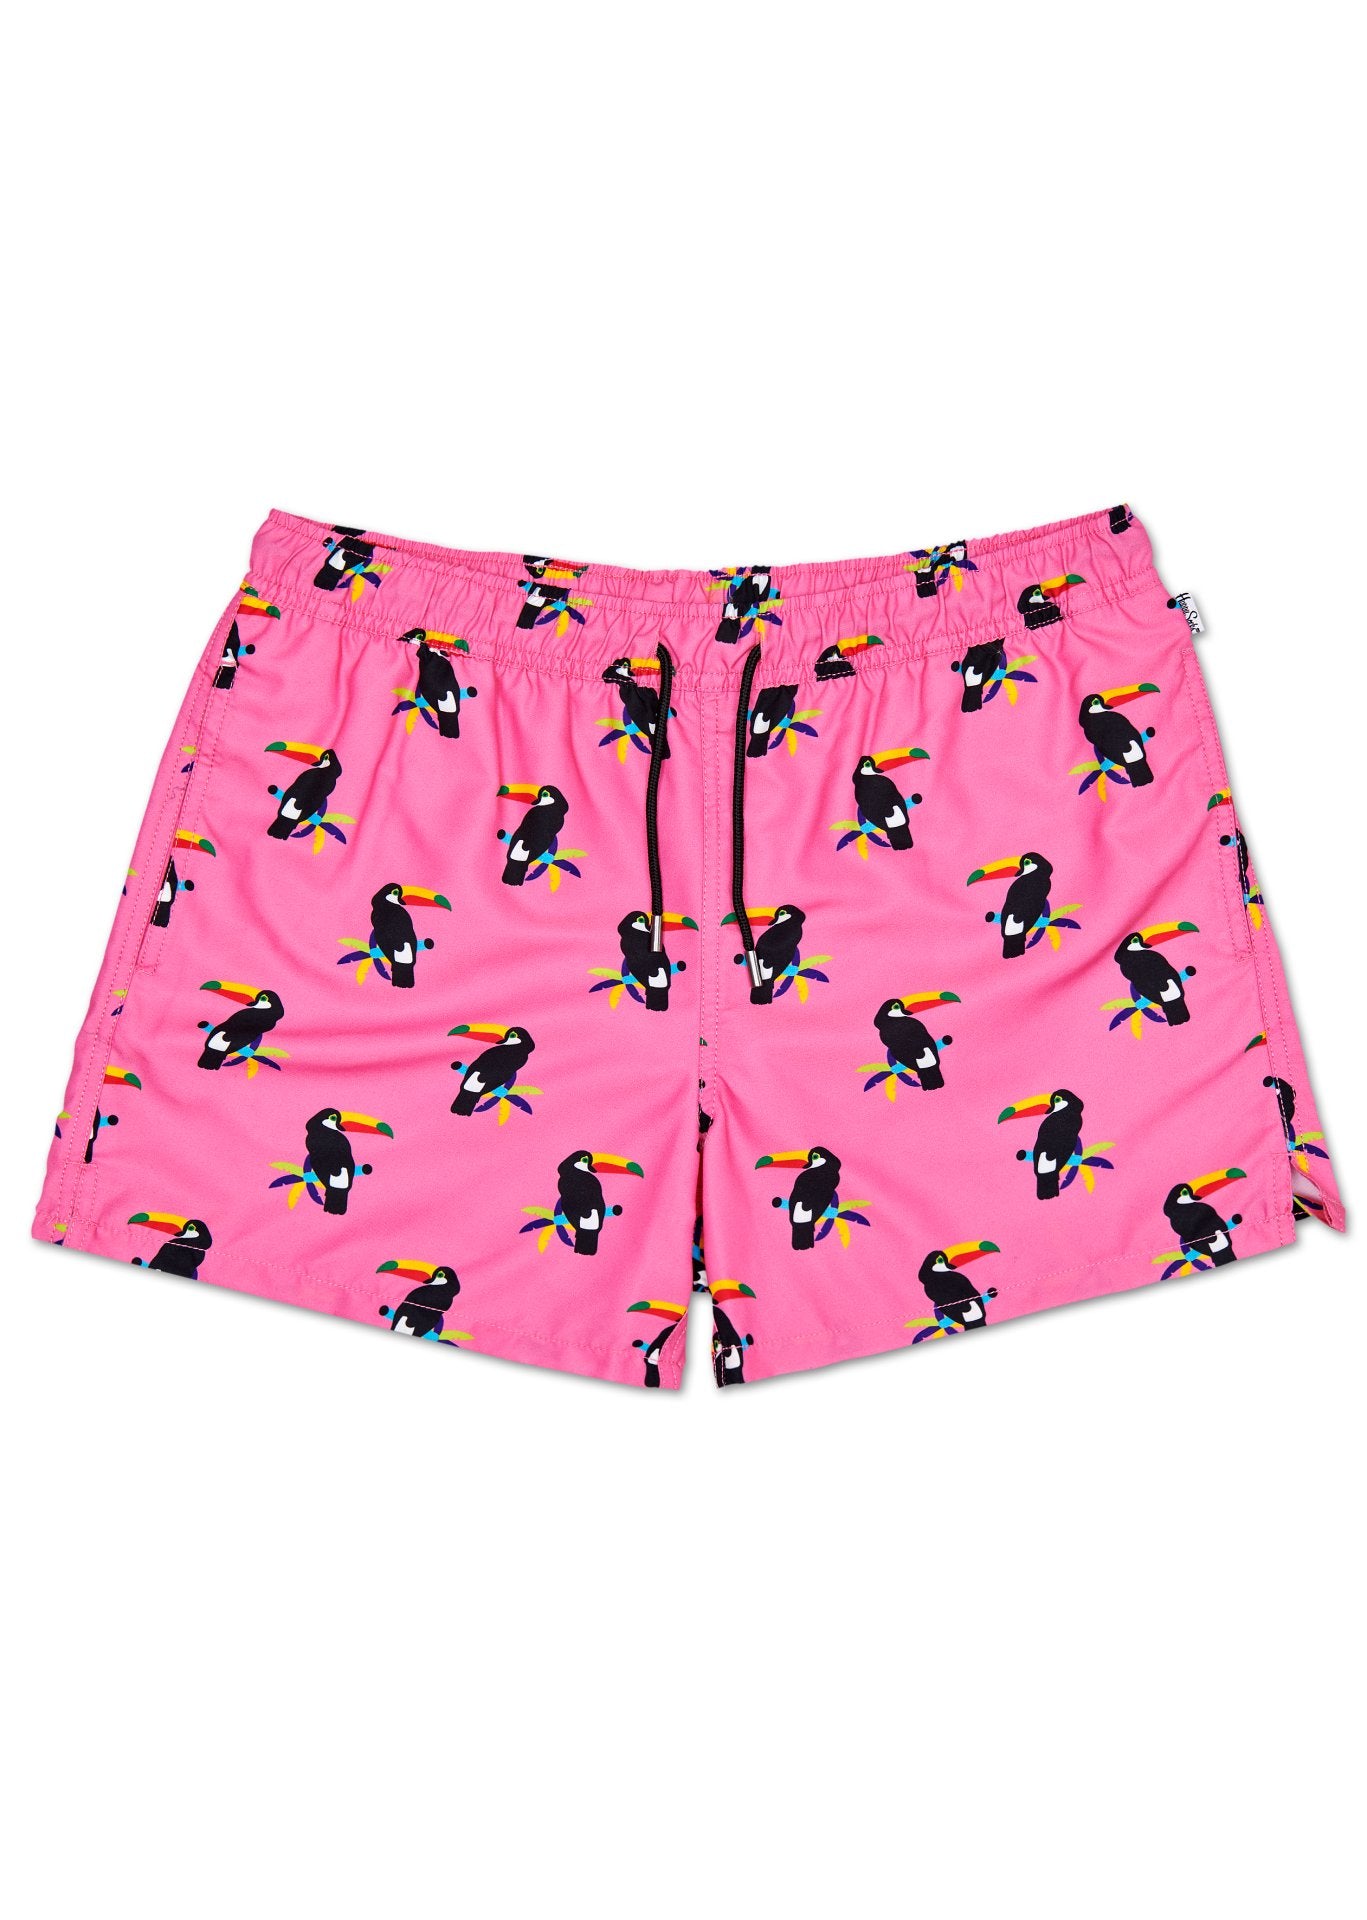 Pánské růžové plavky Happy Socks s tukanem, vzor Toucan